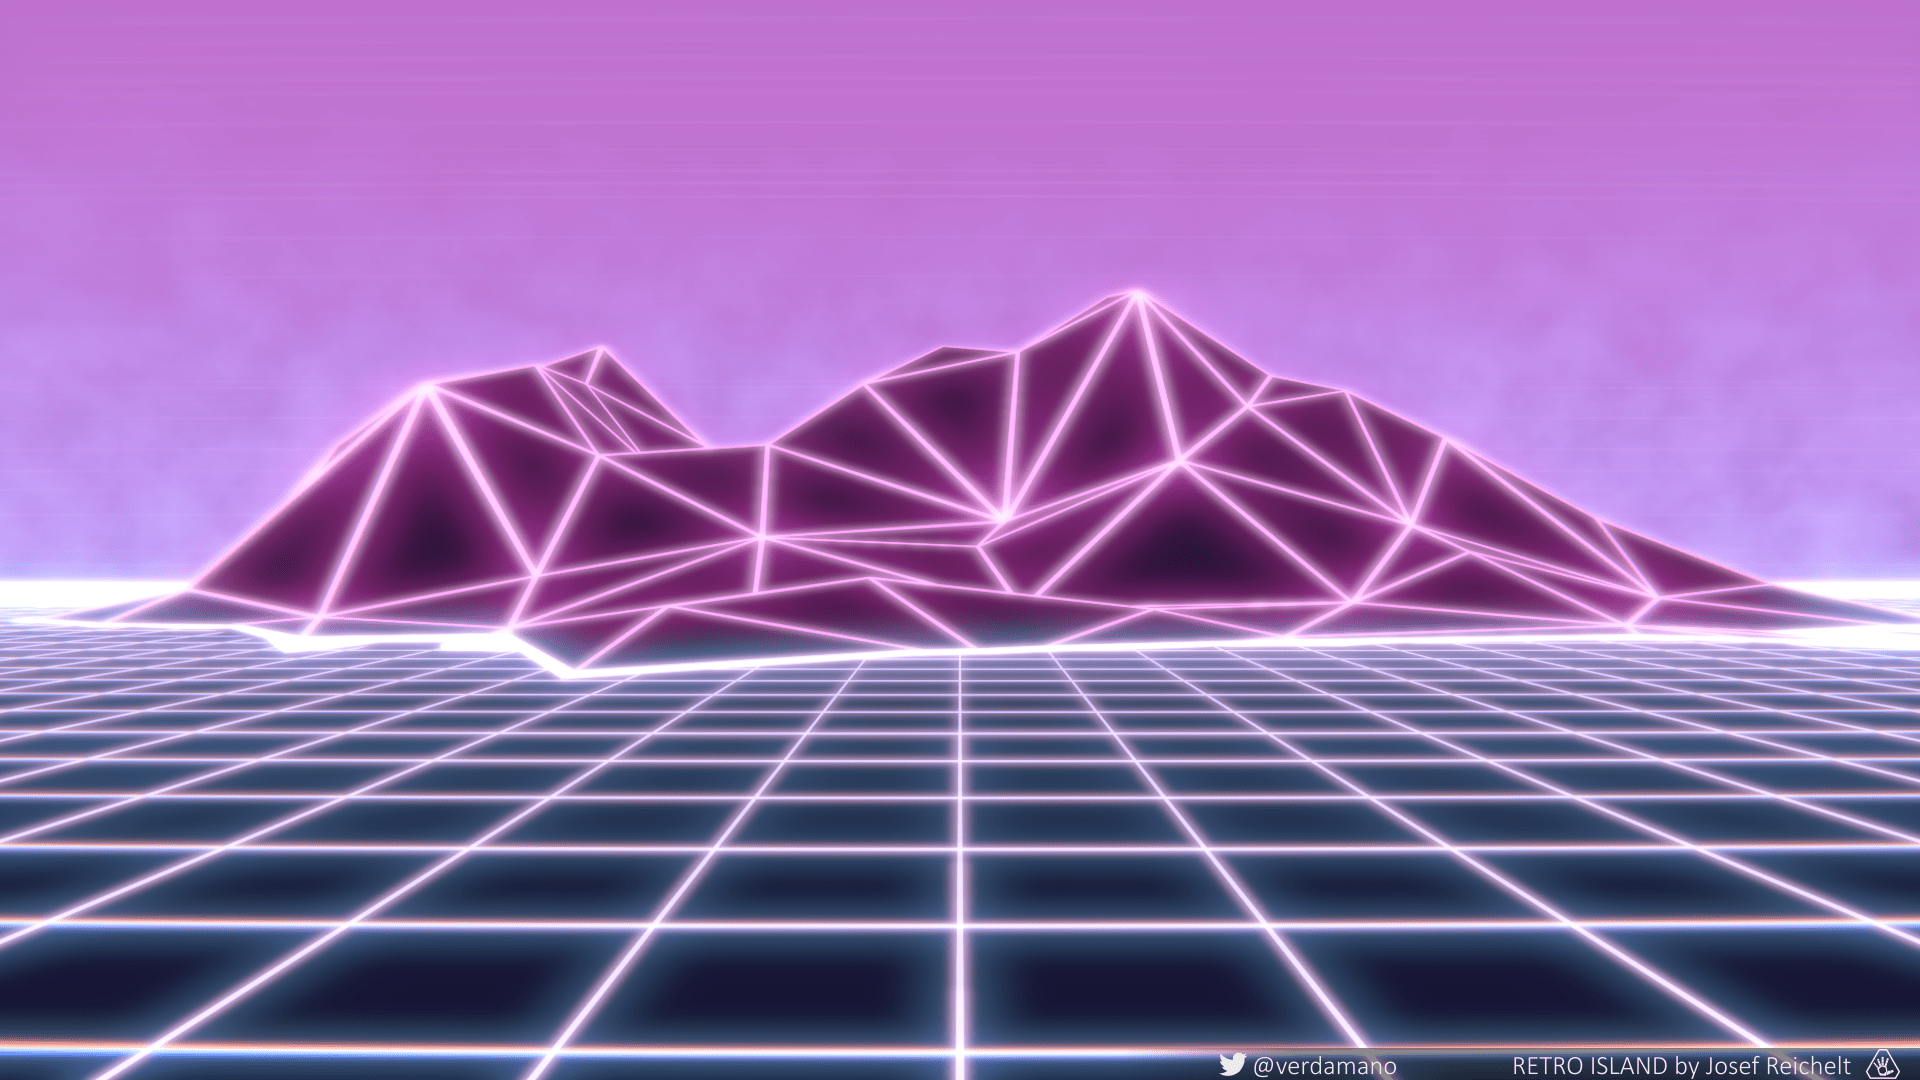 A neon purple mountain range on a grid. - Low poly